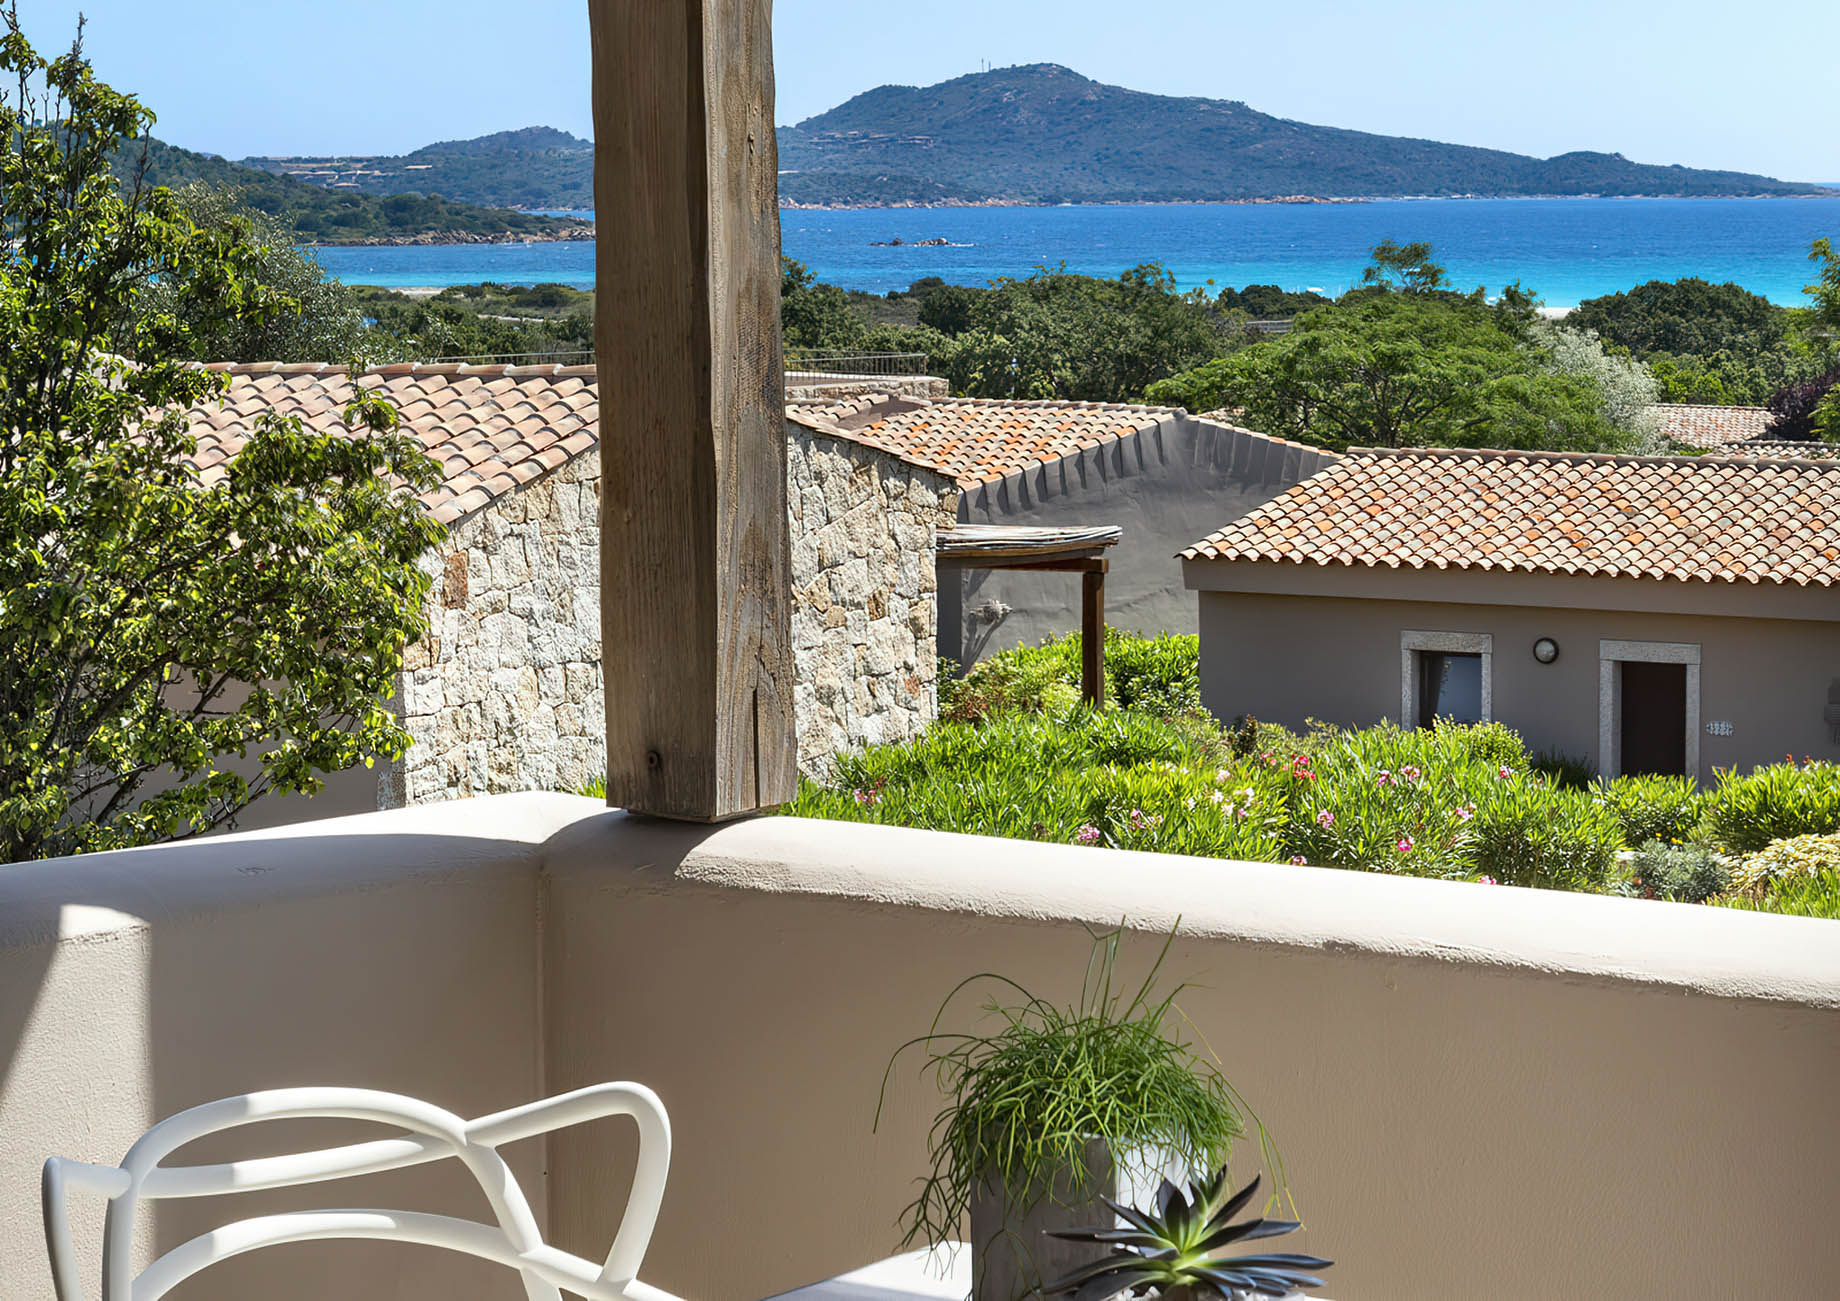 Baglioni Resort Sardinia – San Teodoro, Sardegna, Italy – Junior Suite Sea View